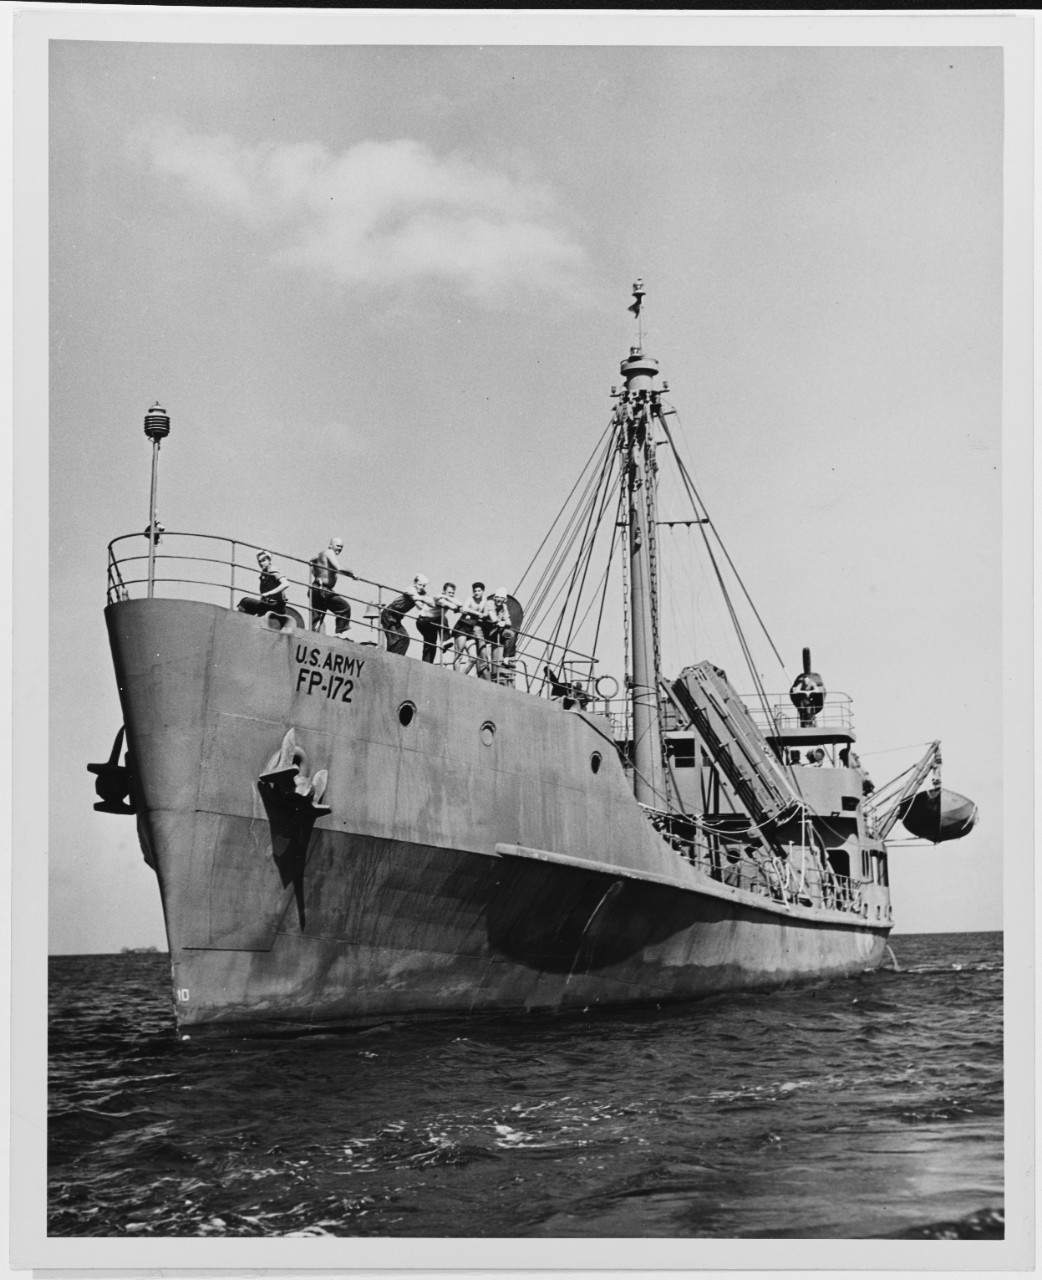 U.S. Army Cargo Vessel FP-172